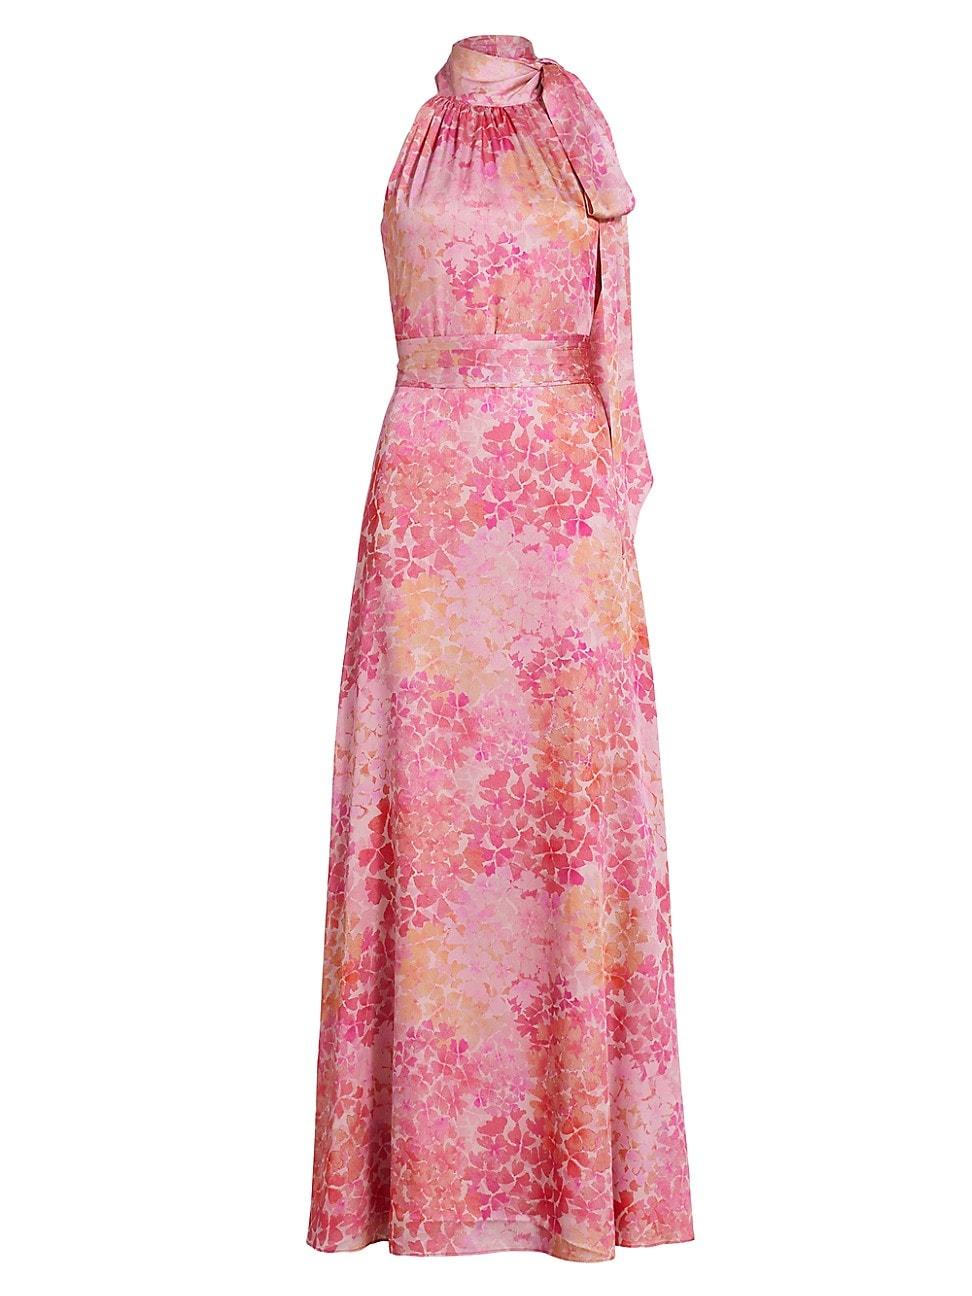 Sachin & Babi Kayla Floral Satin Halter Gown in Pink | Lyst